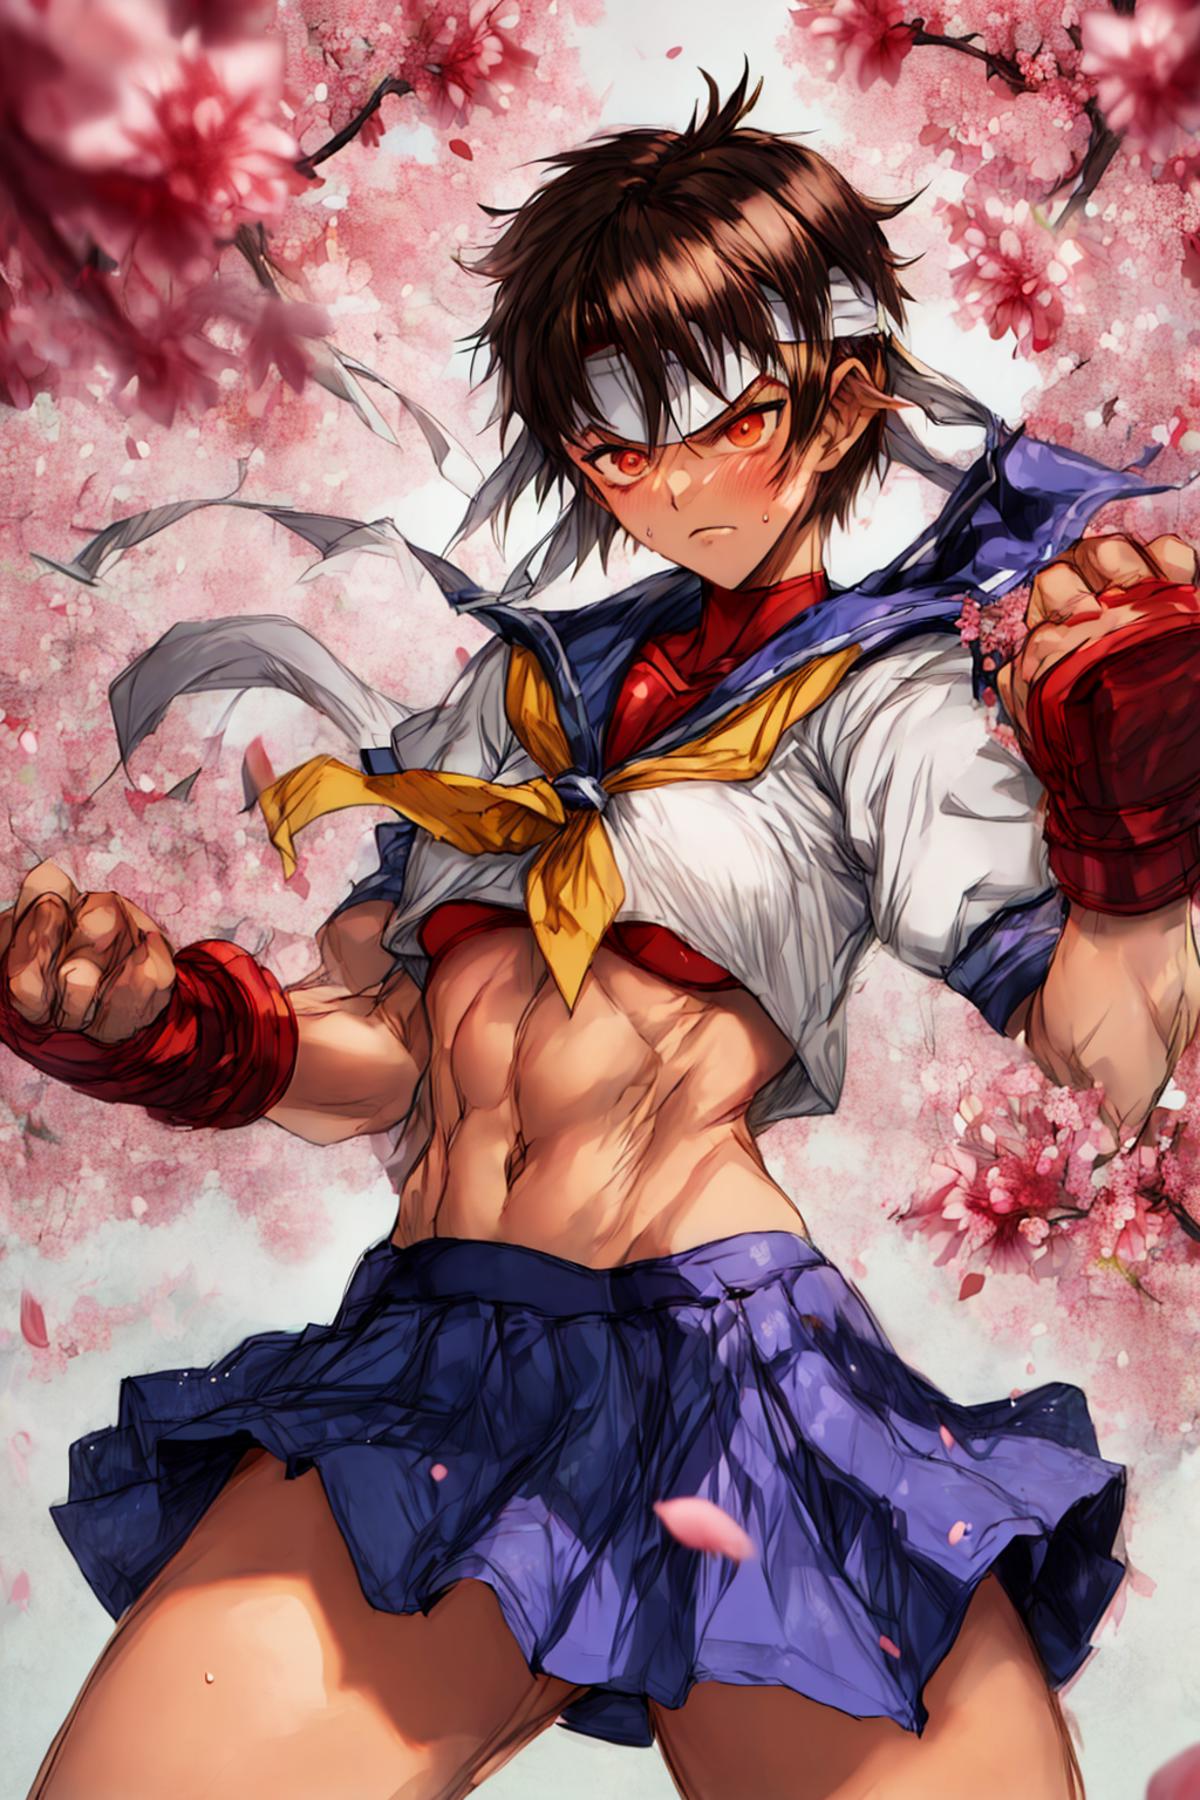 Kasugano Sakura / Street Fighter image by BlueberryTrain